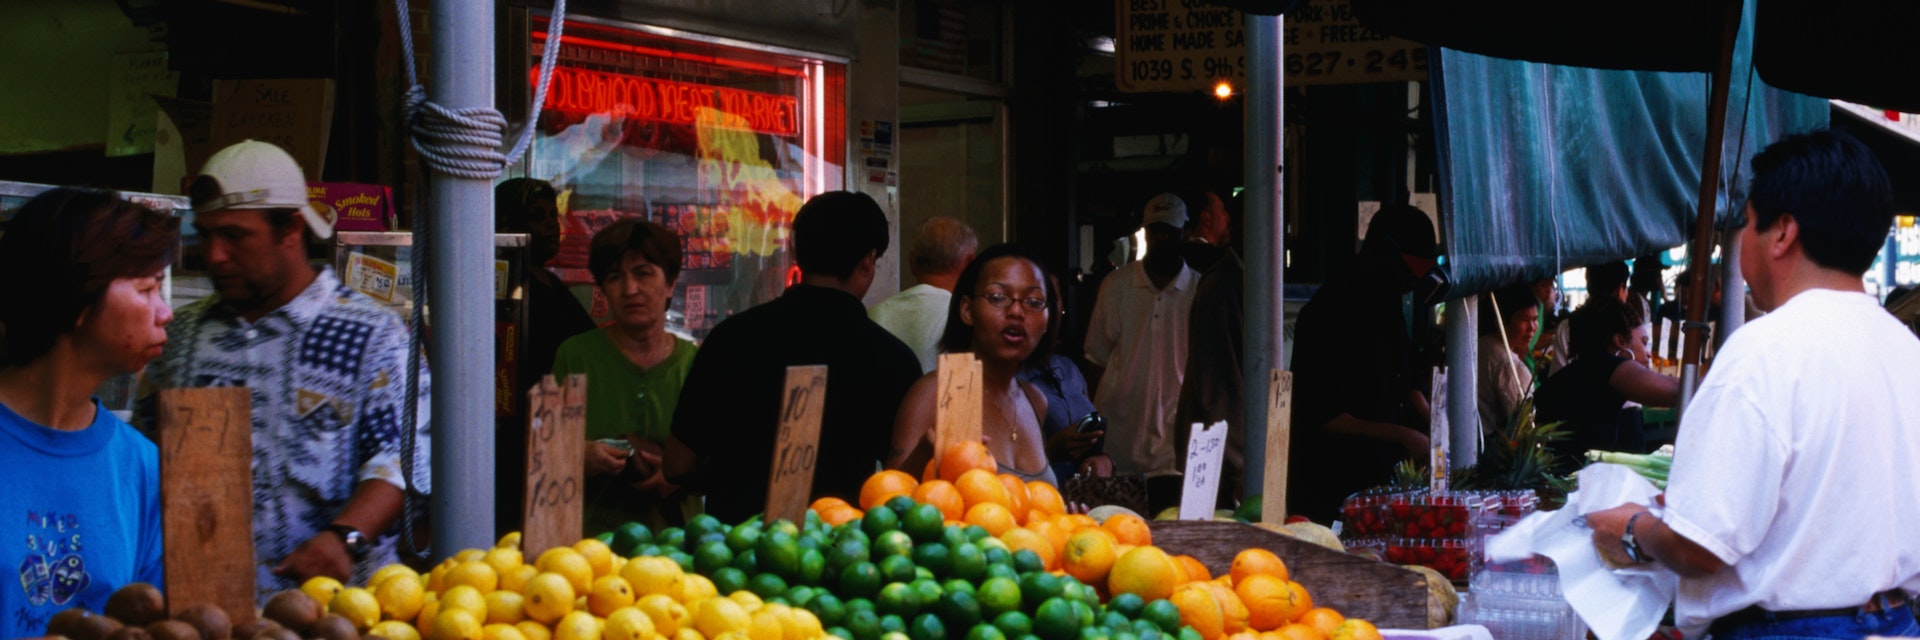 Produce vendor at Italian Market.